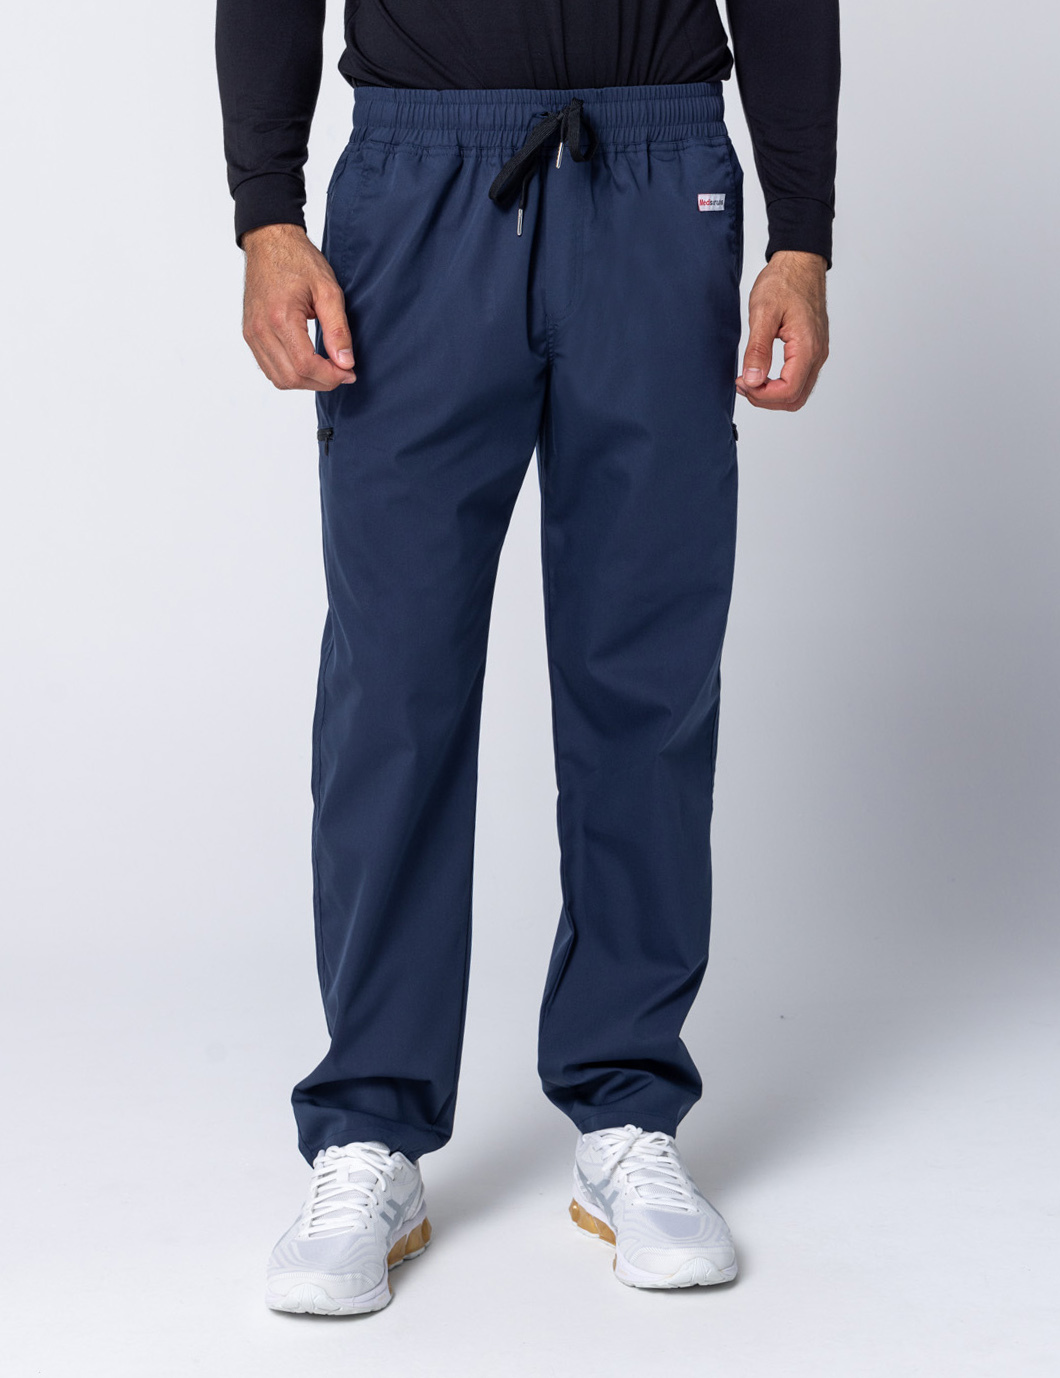 Men's Utility Pants - Navy - Large